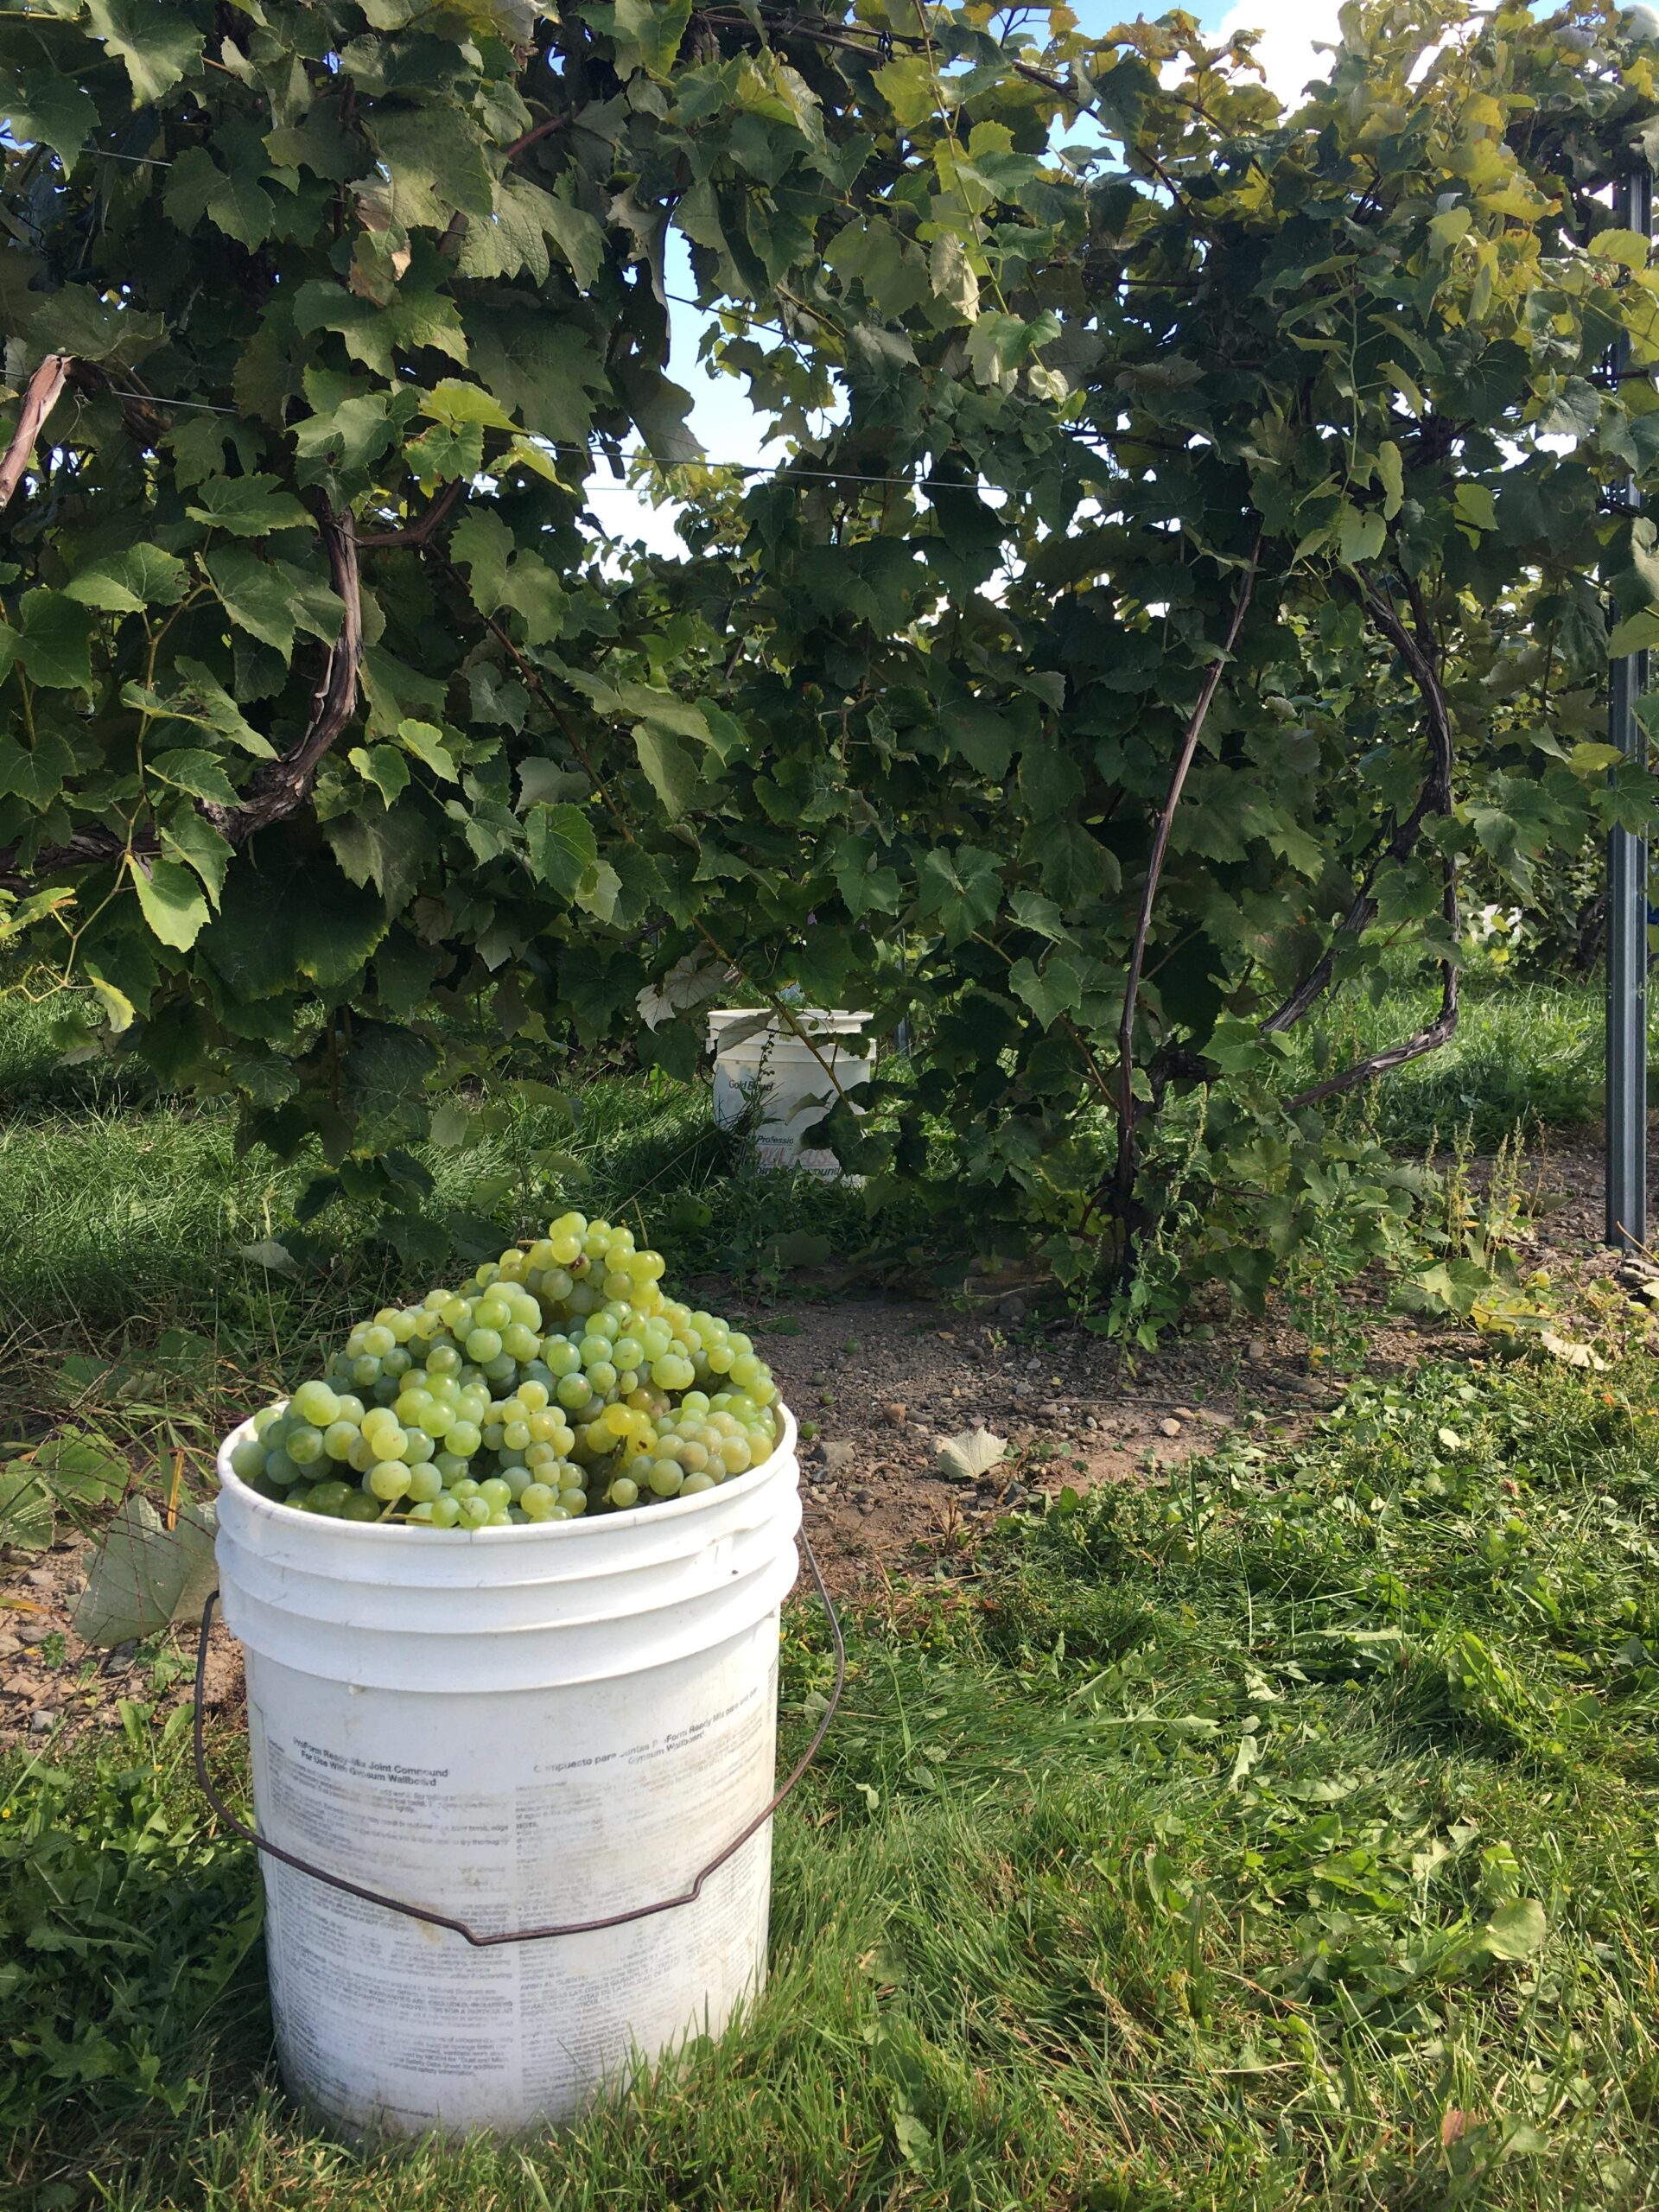 Community Harvest Bucket bounty of Vermont Grapes